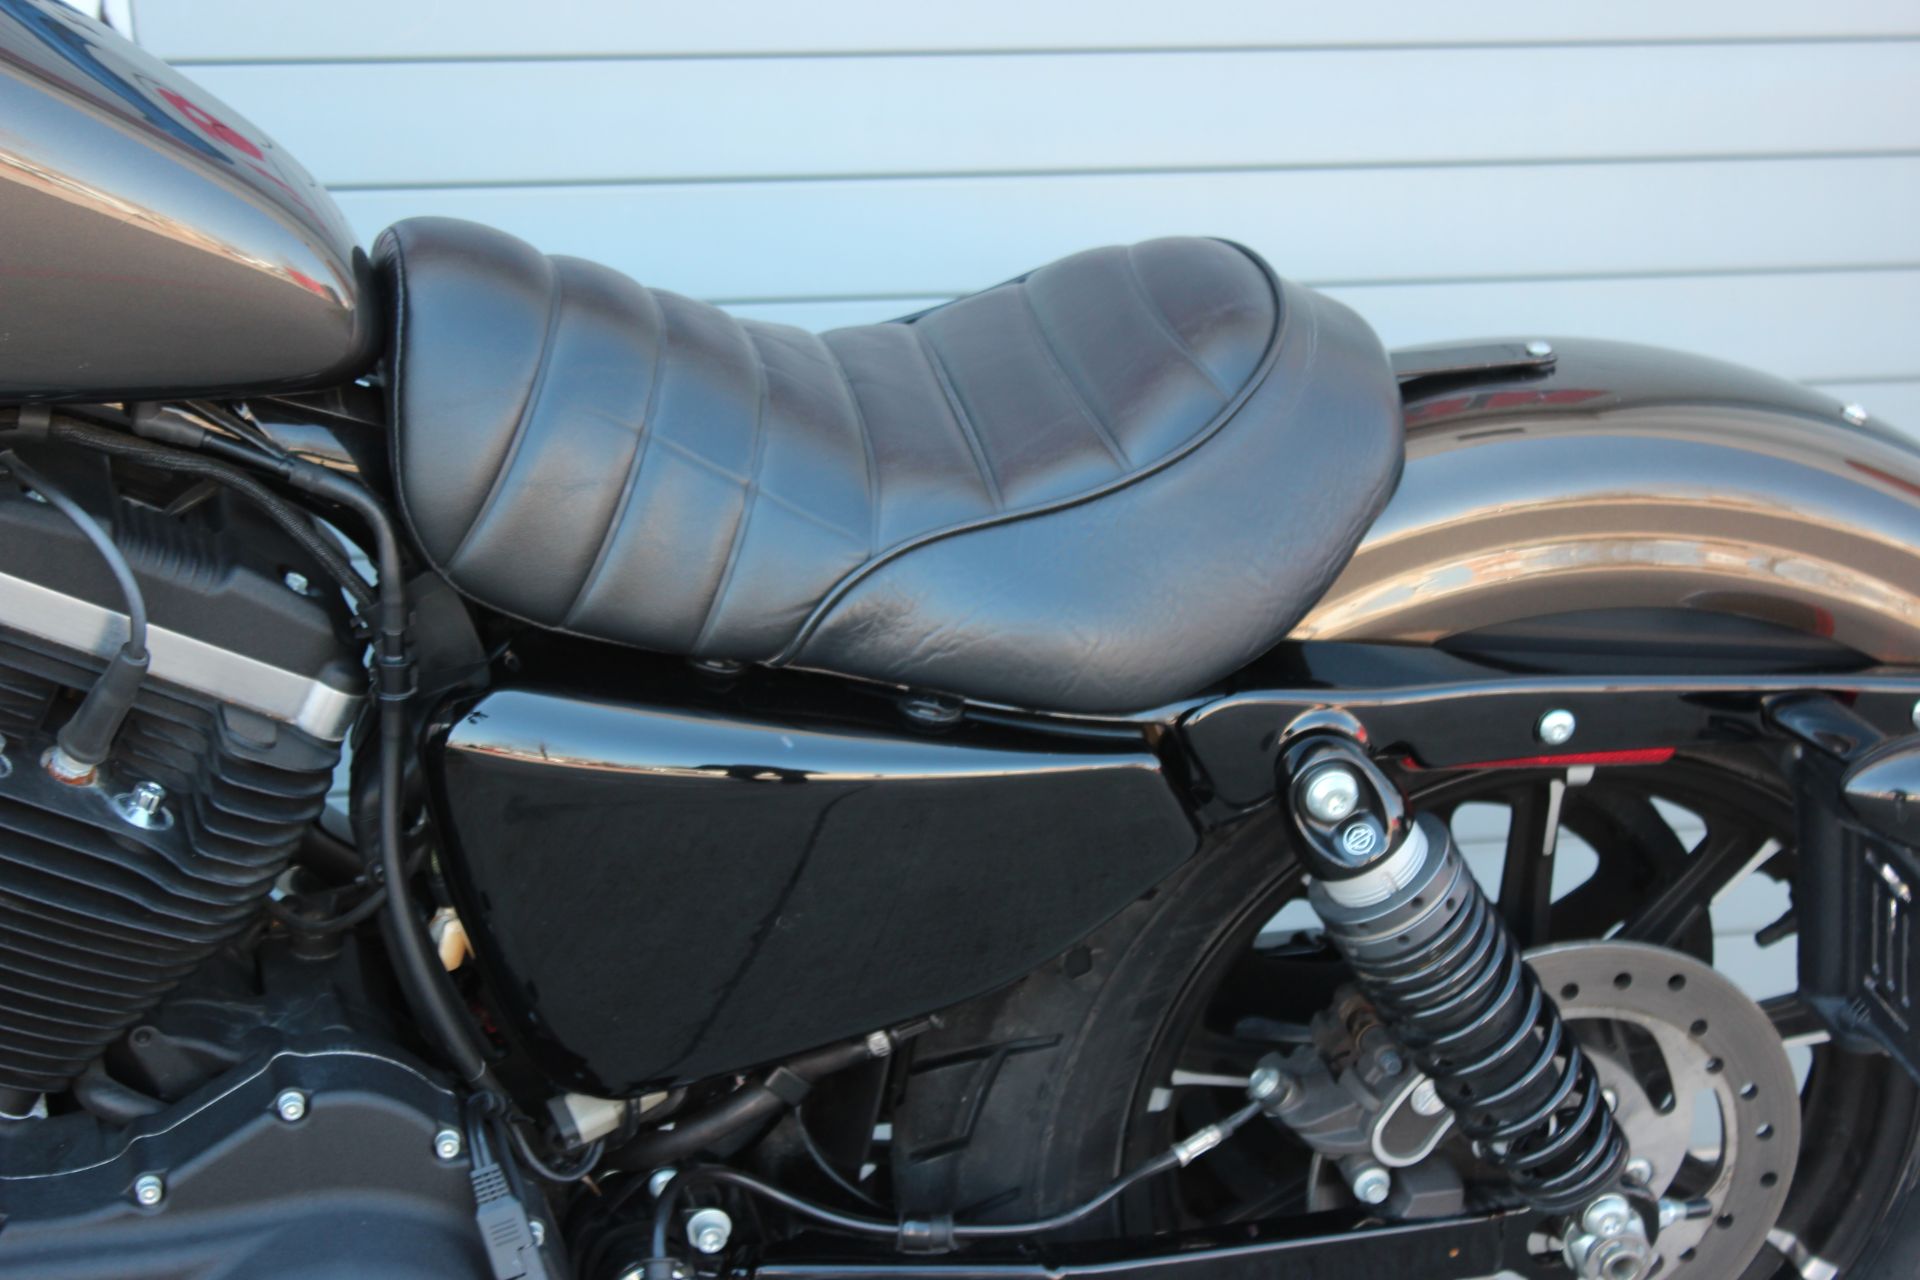 2020 Harley-Davidson Iron 883™ in Grand Prairie, Texas - Photo 19